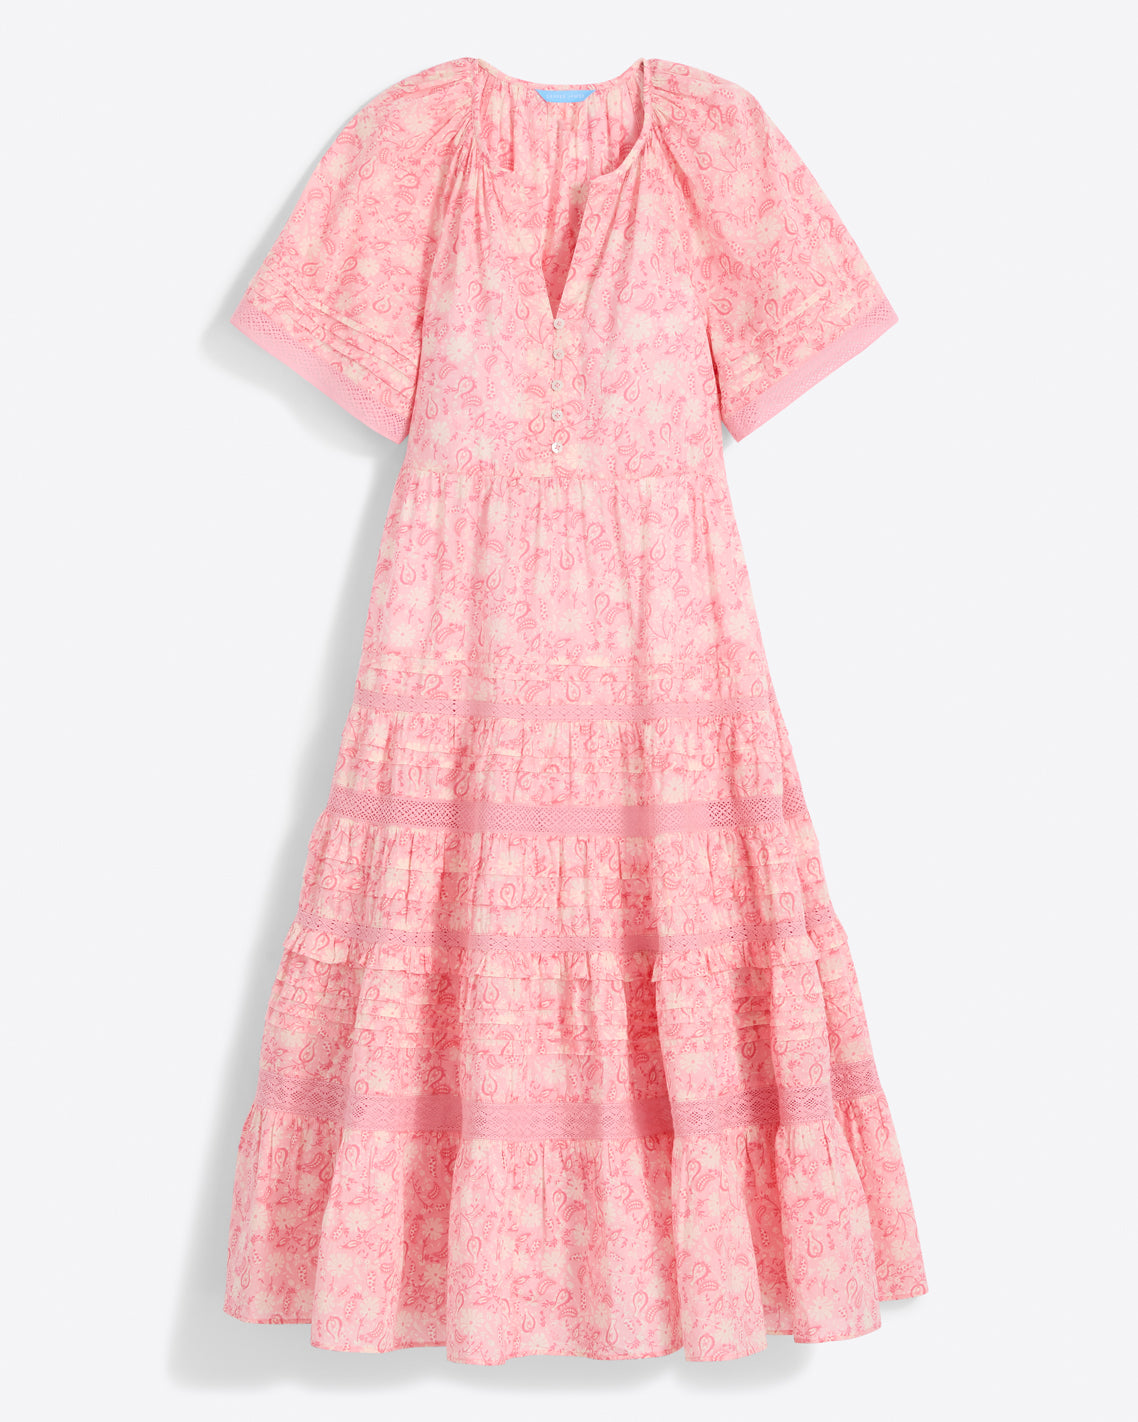 Carlene Midi Dress in Pink Paisley